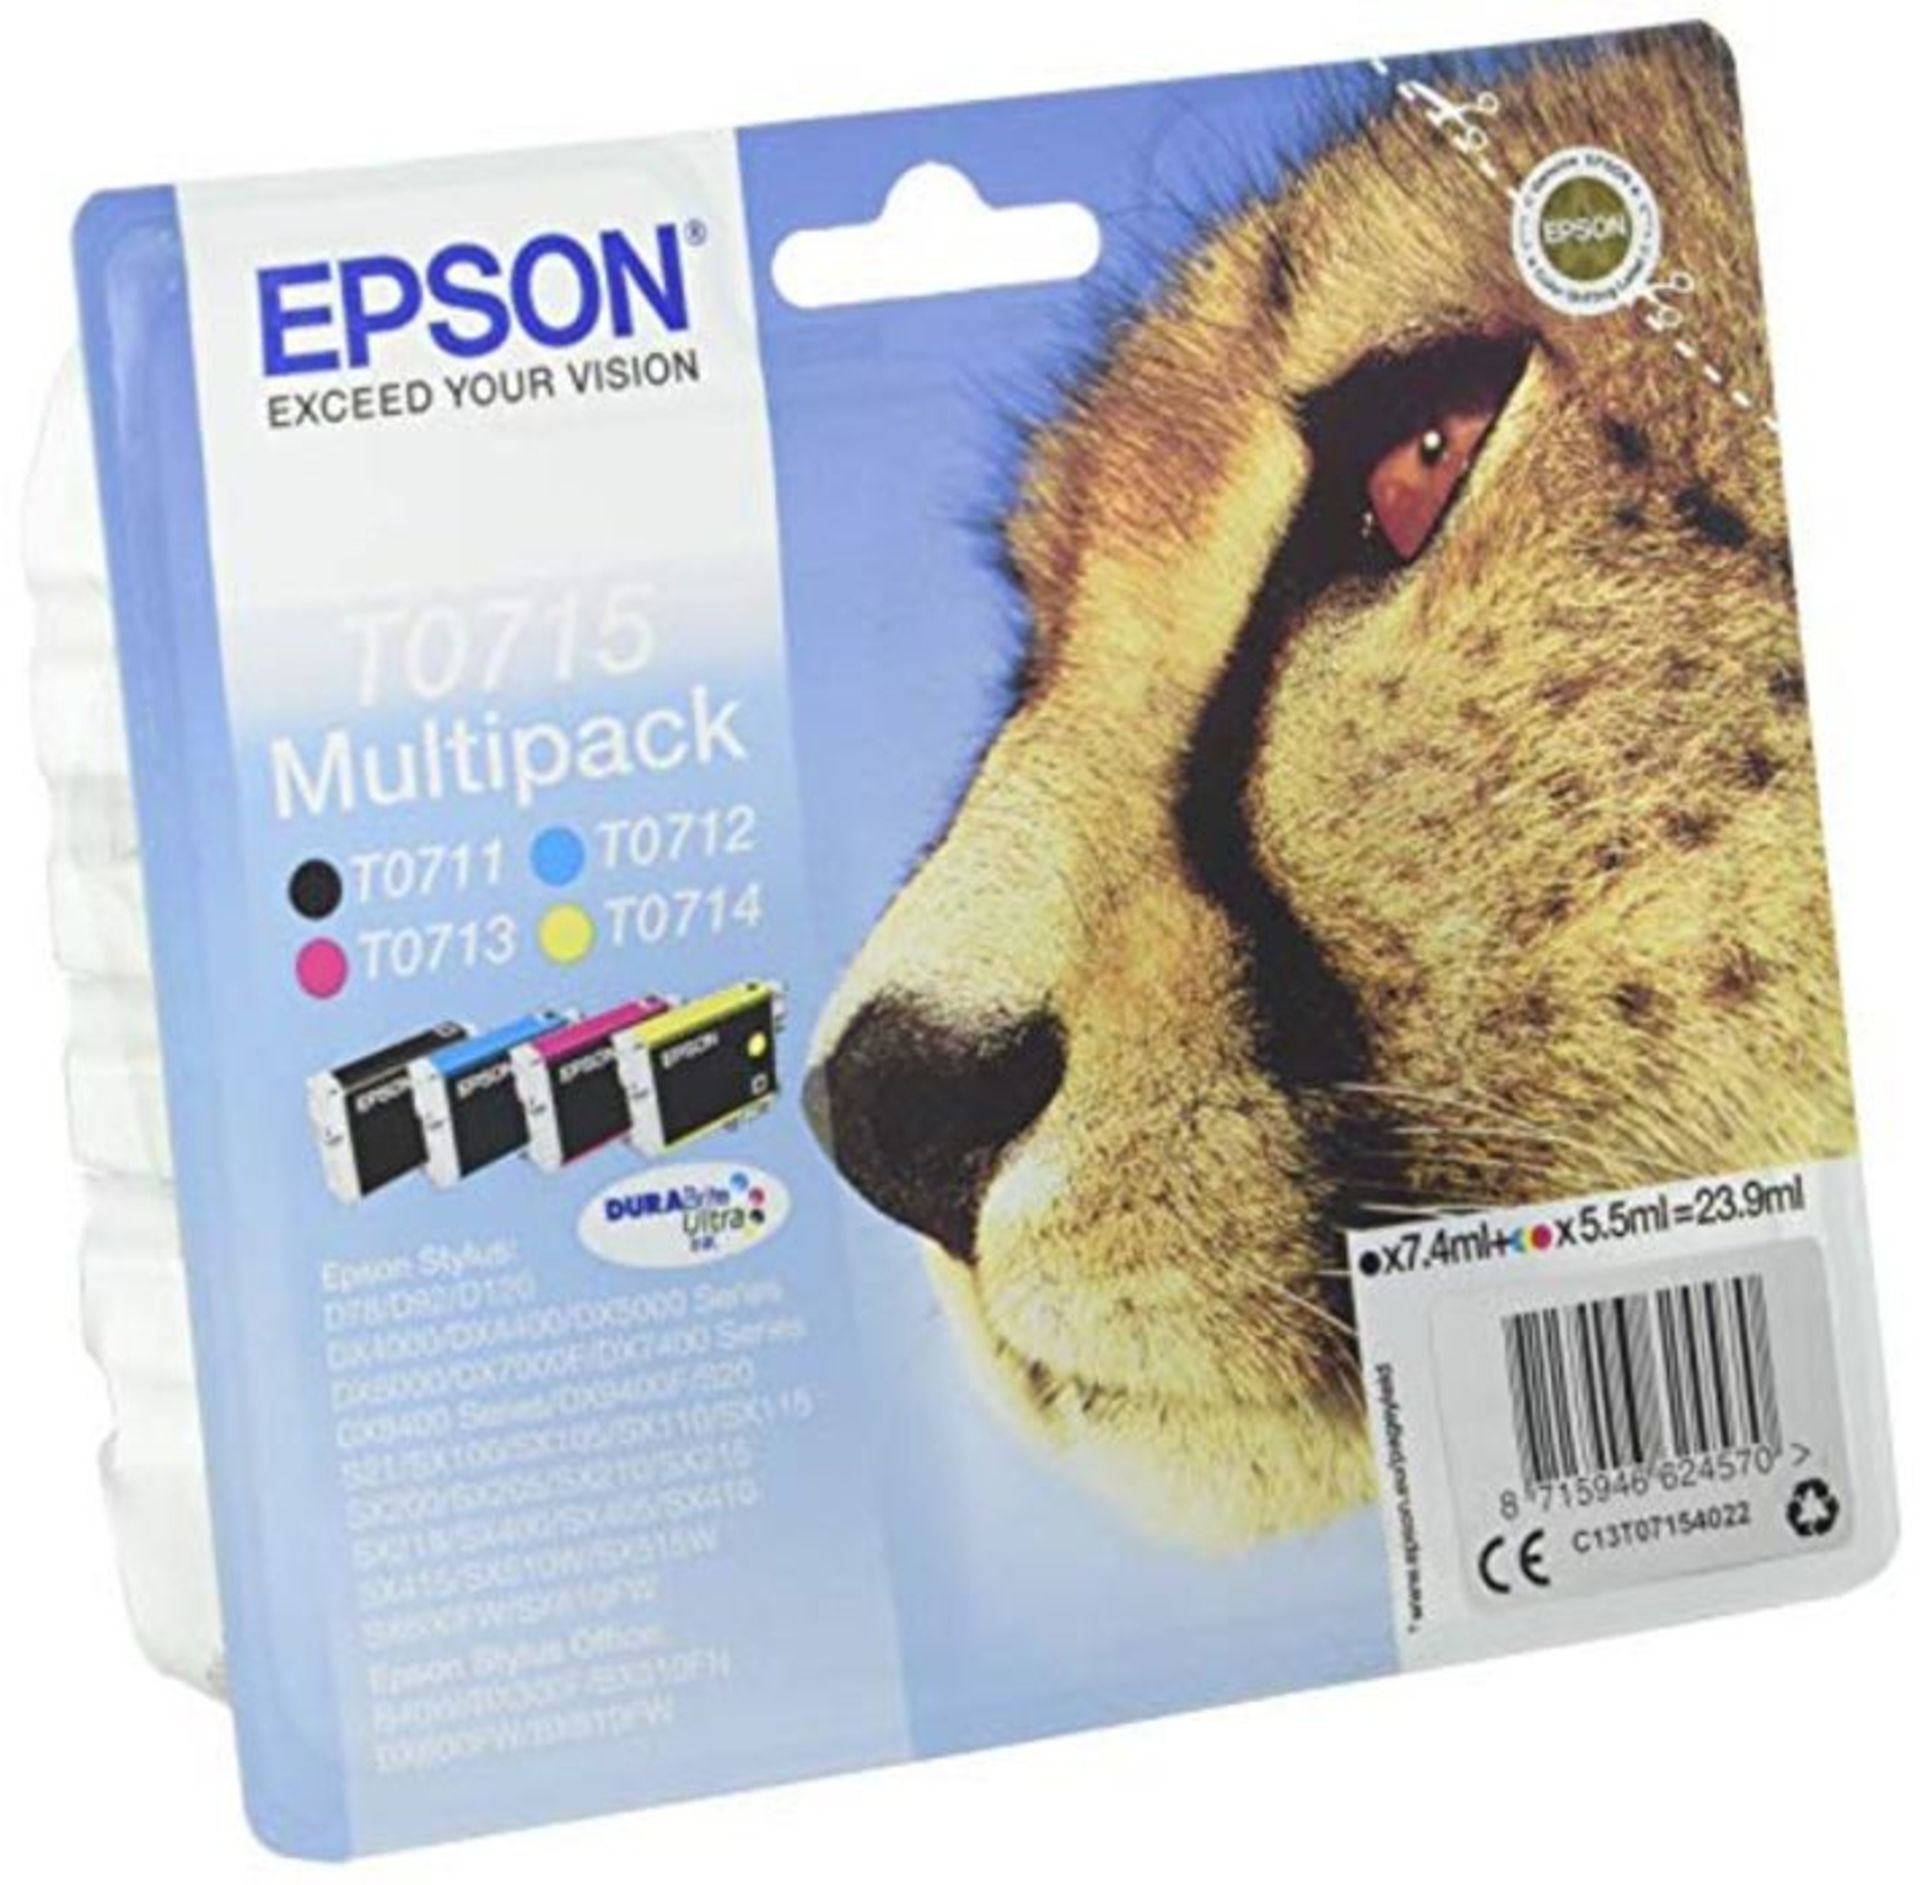 [CRACKED] EPSON Cheetah Ink Cartridge for Epson Stylus SX600FW Series - Assorted